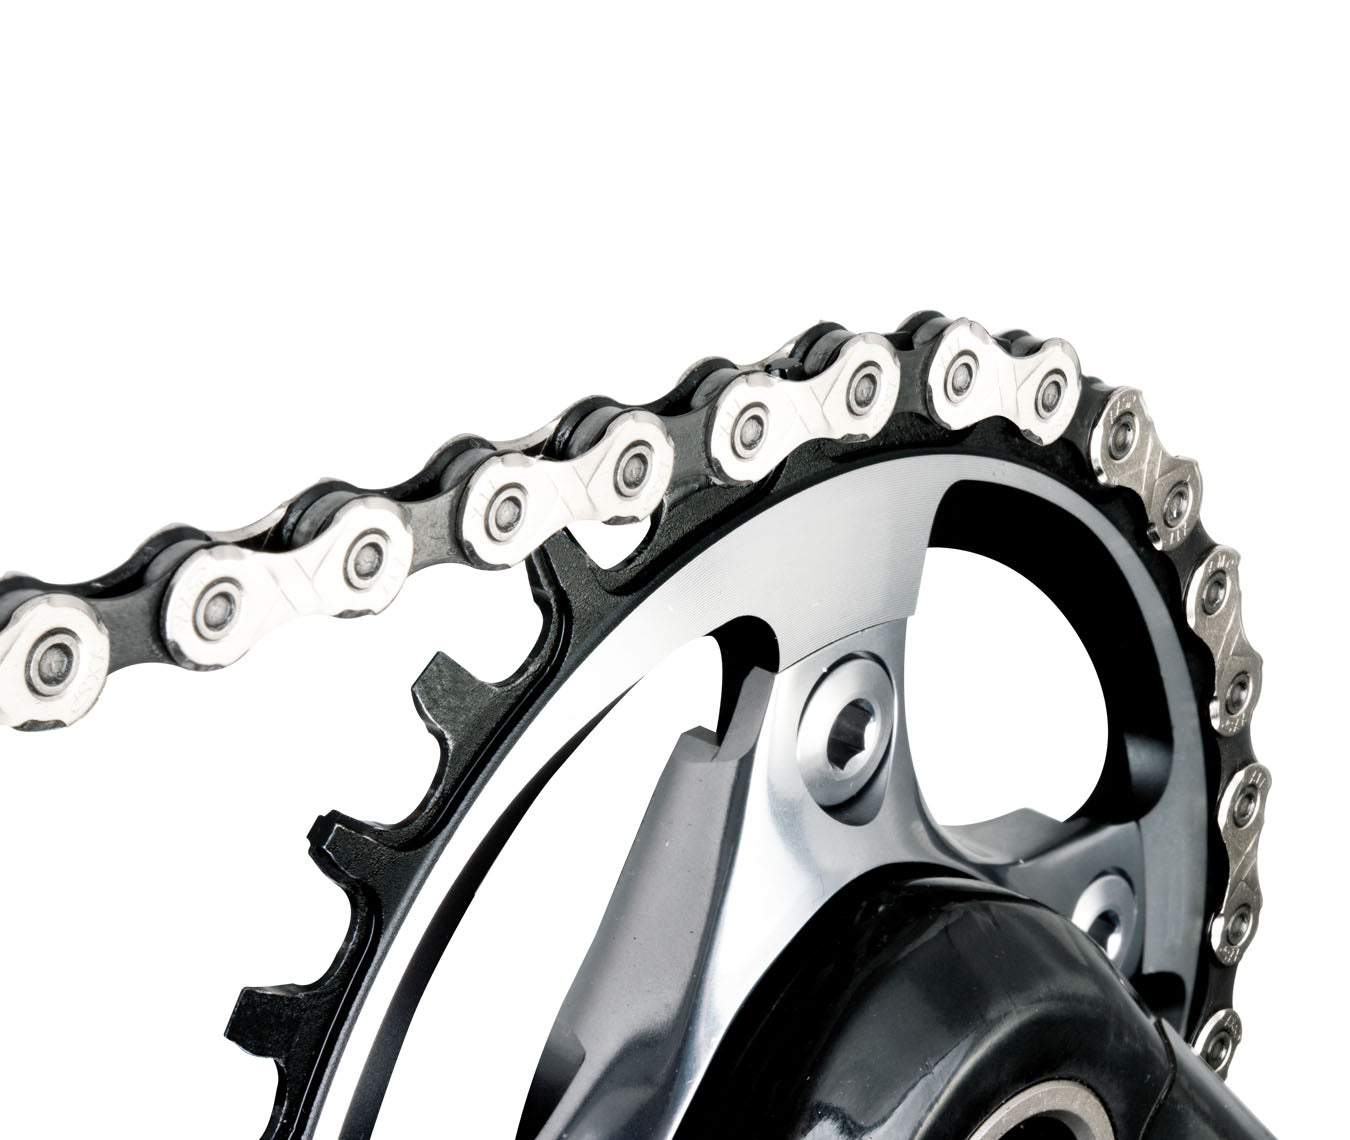 KMC X11 11-Speed Bike Chain 118 Links - Silver / Black